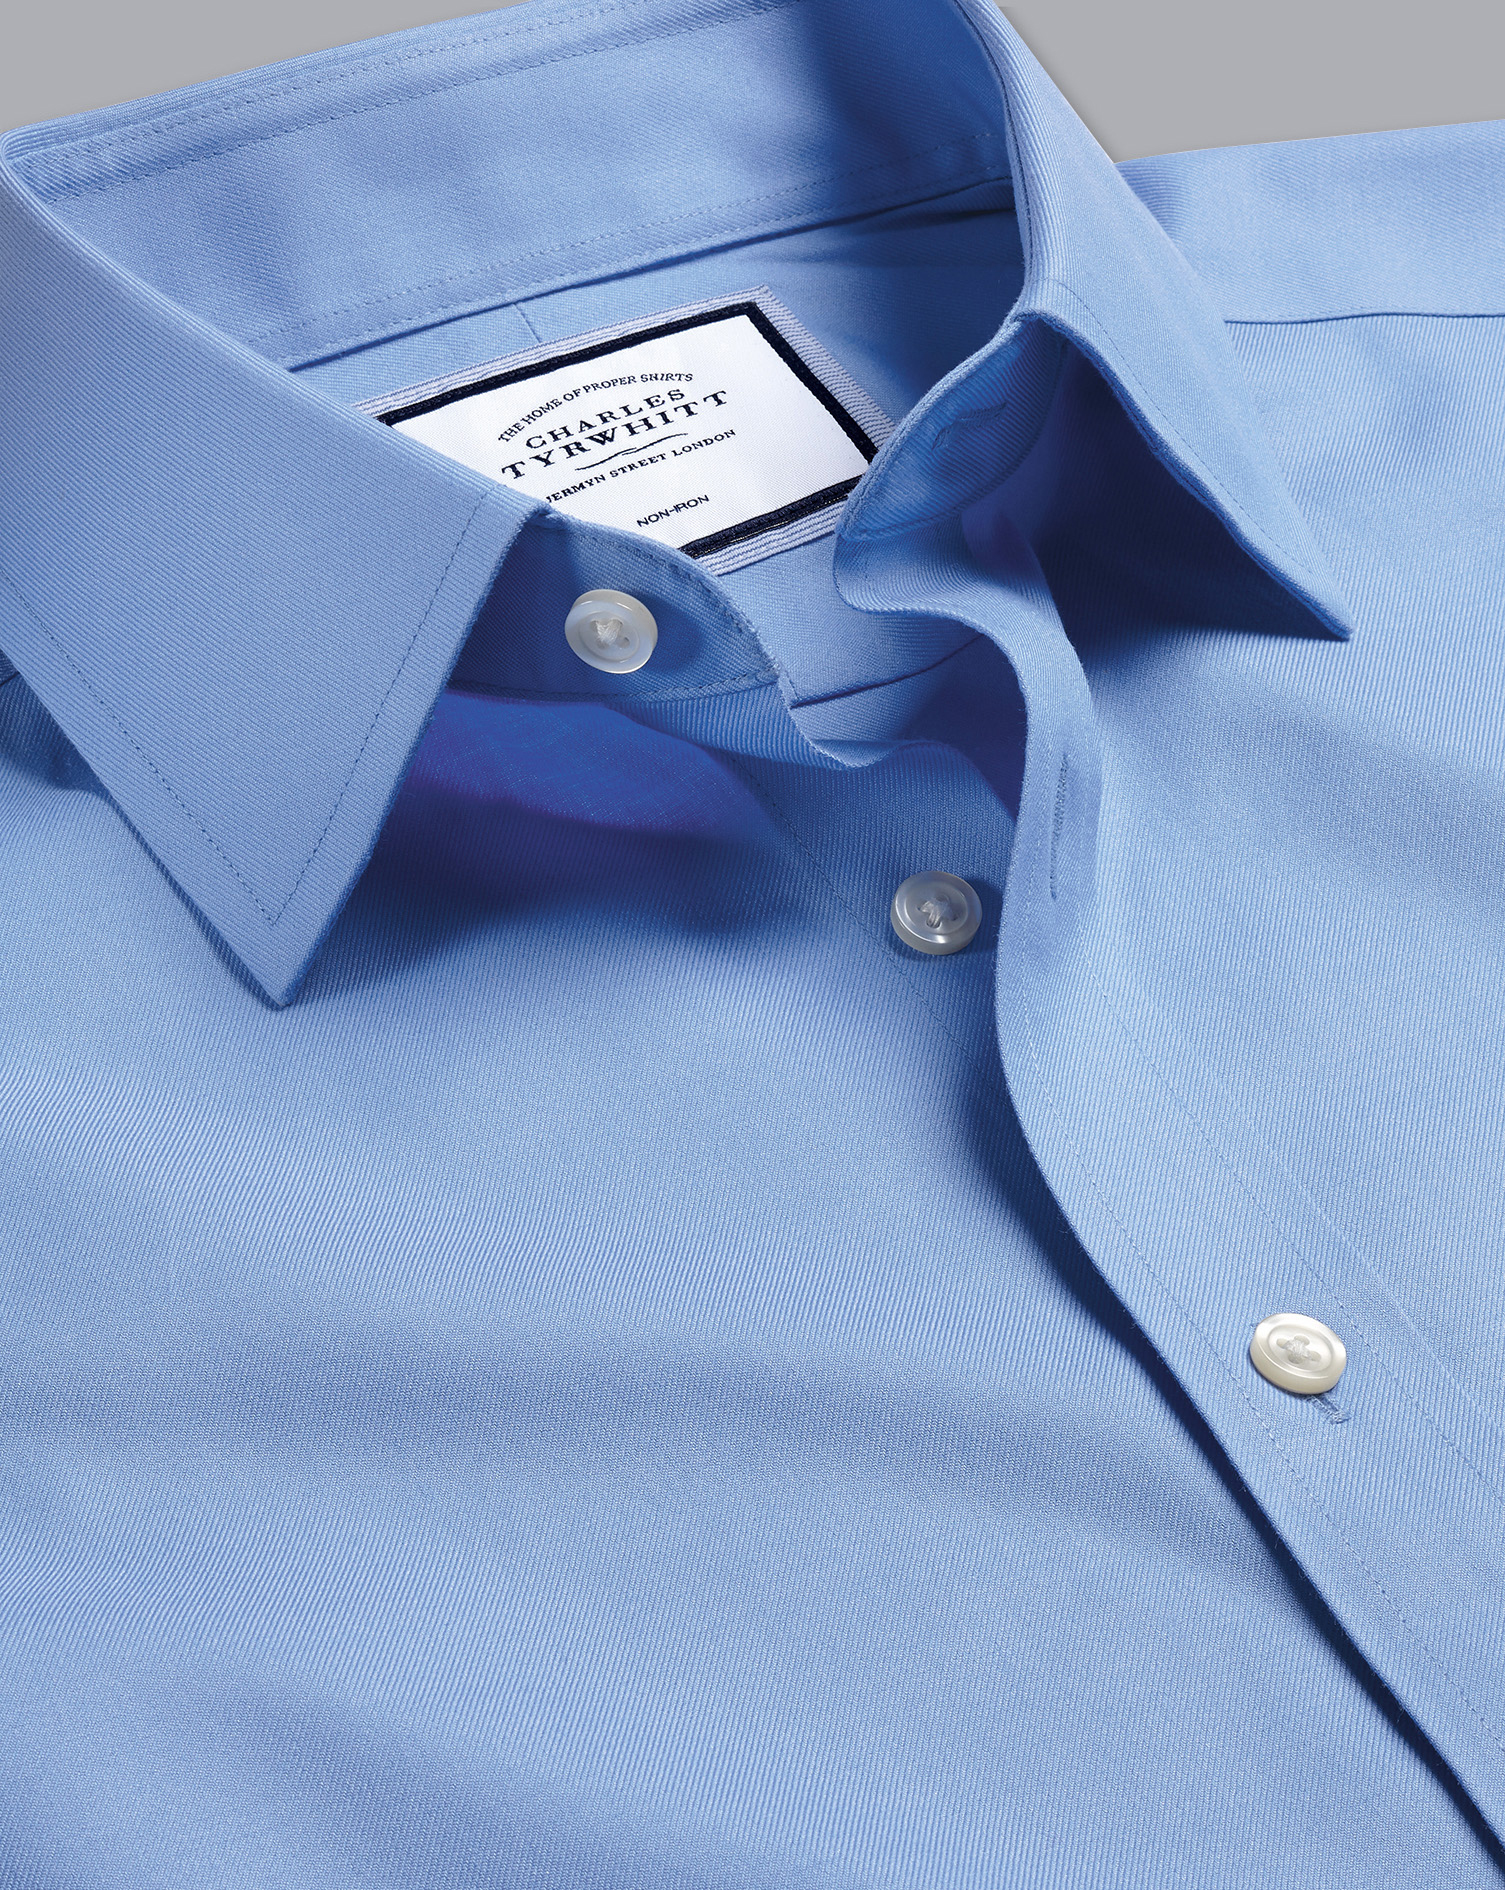 Non-Iron Twill Cotton Dress Shirt - Cornflower Blue French Cuff Size Medium
